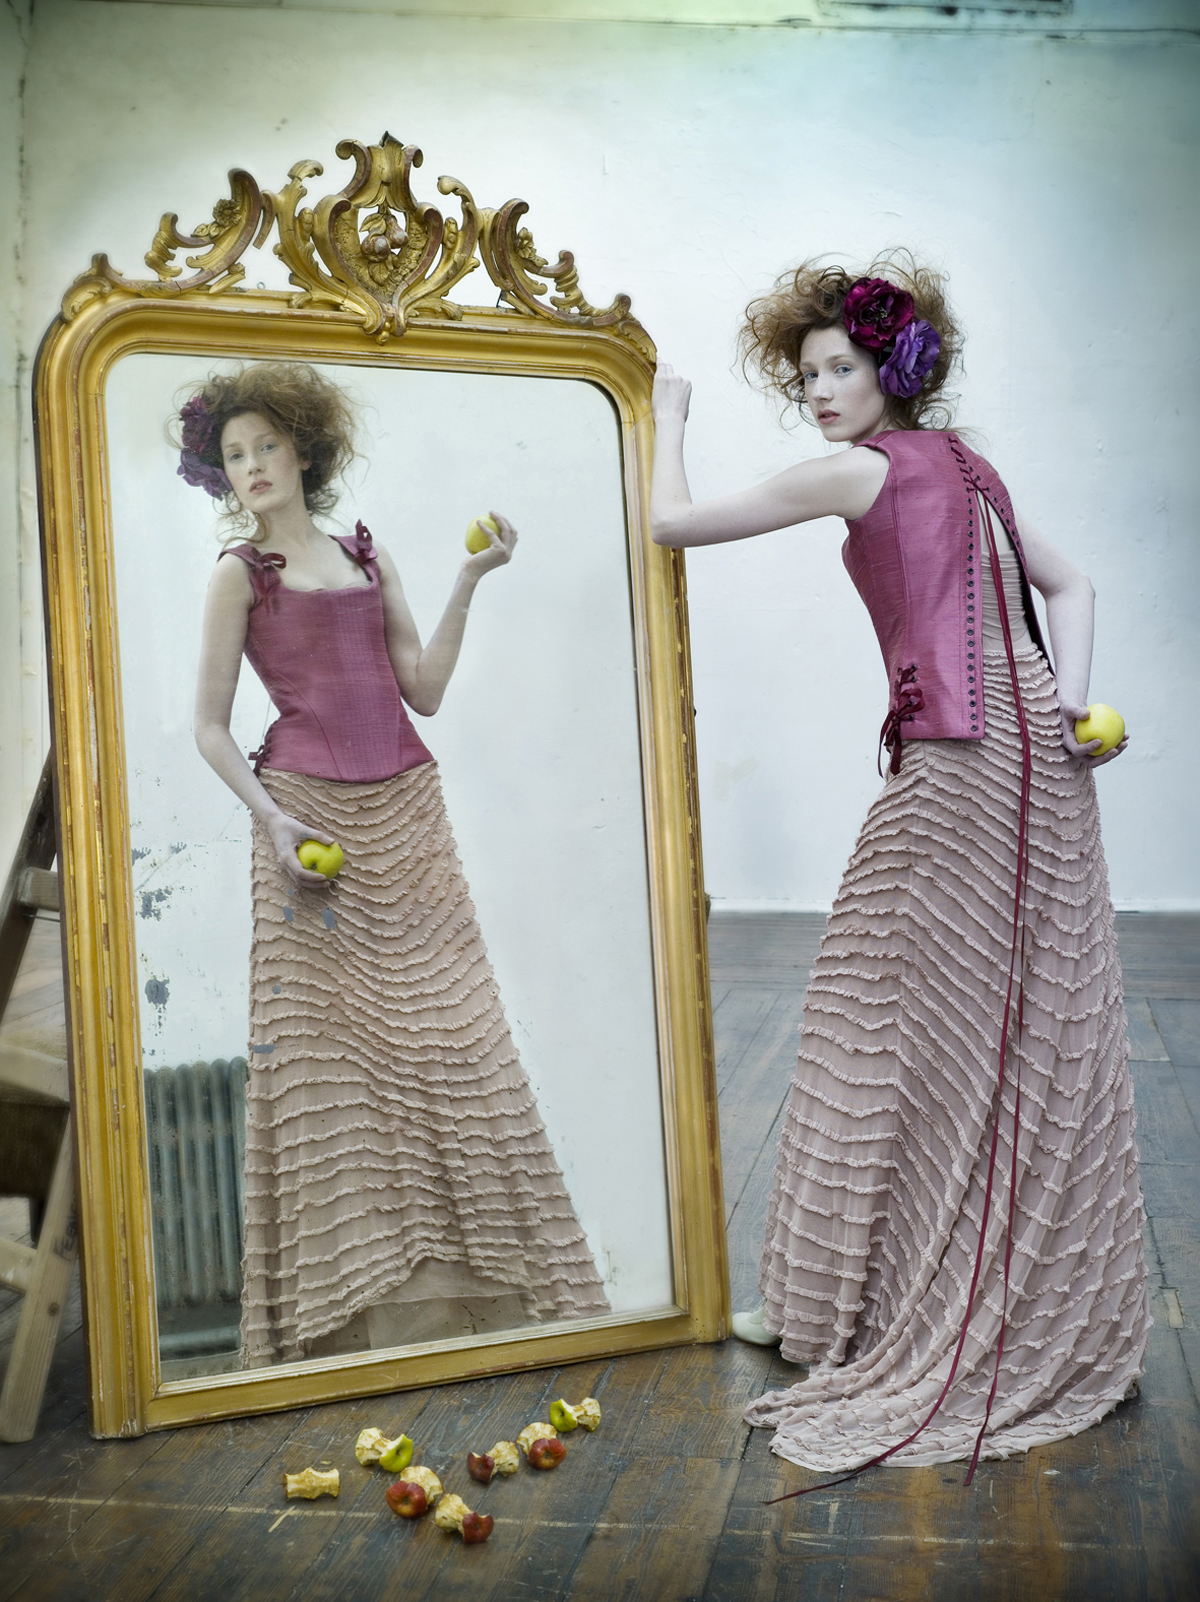 studio fashionshoot with irish model and vintage mirror